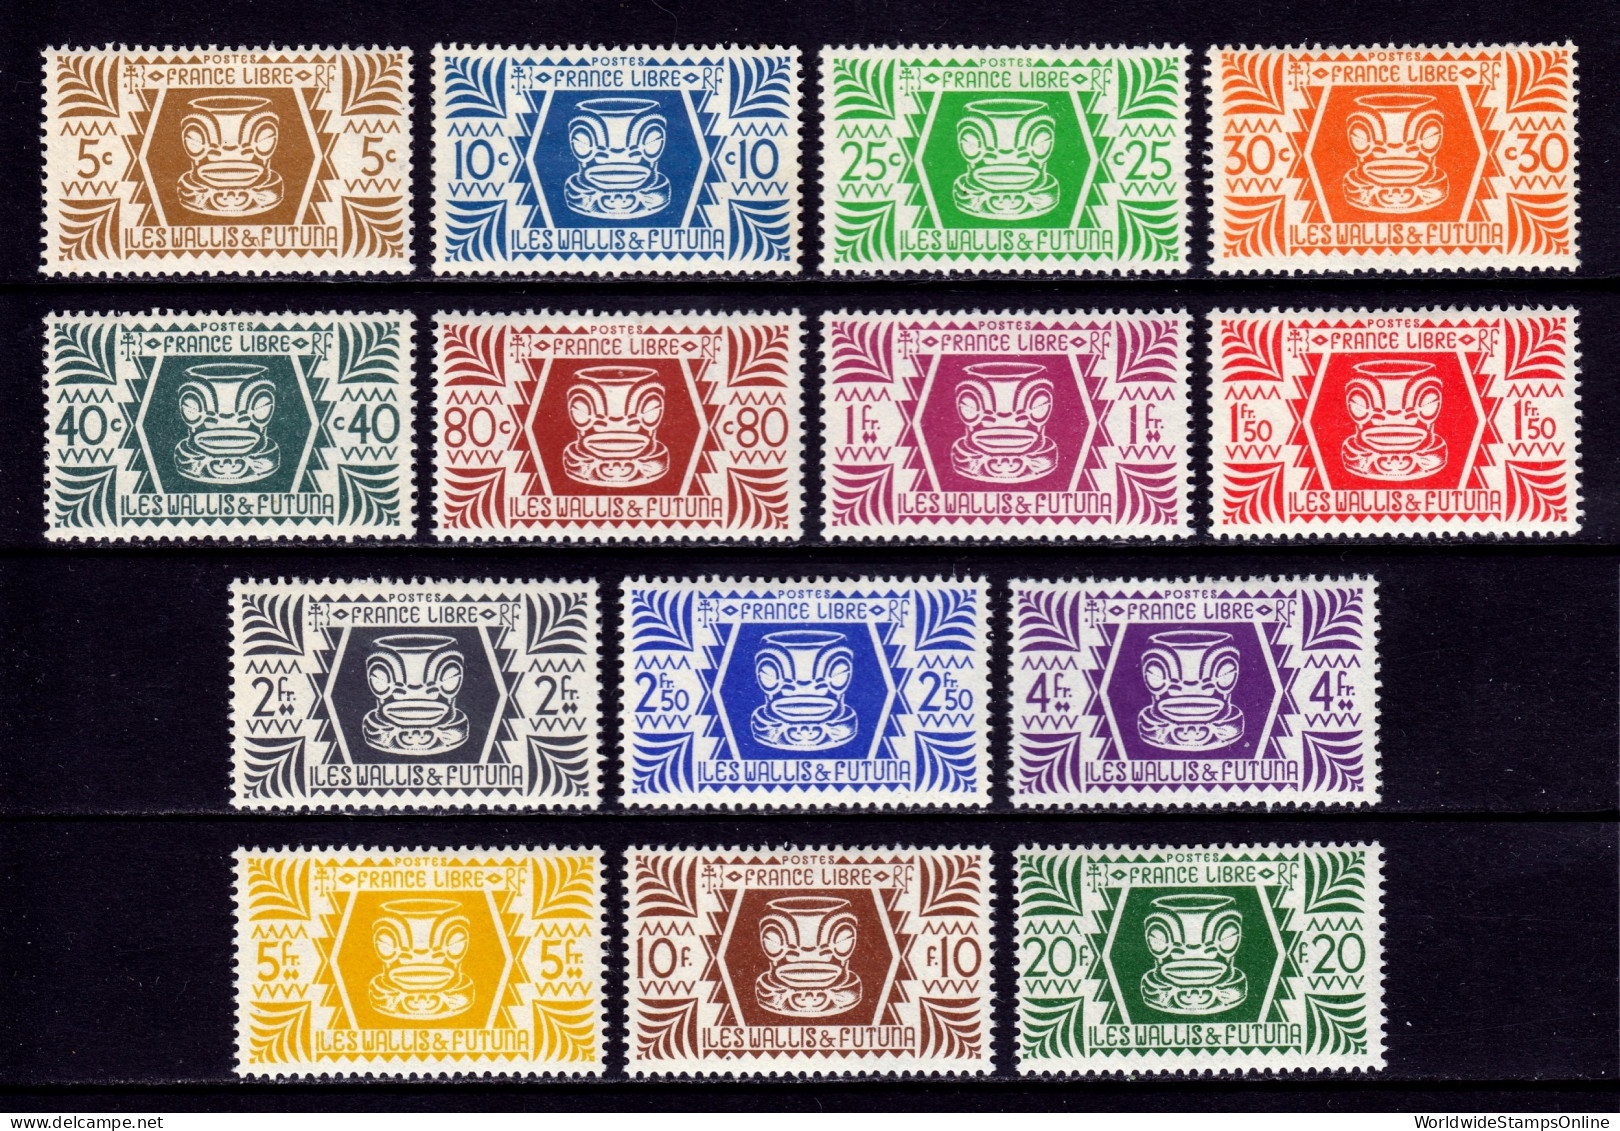 Wallis And Futuna - Scott #128-140 - MH - SCV $12 - Unused Stamps